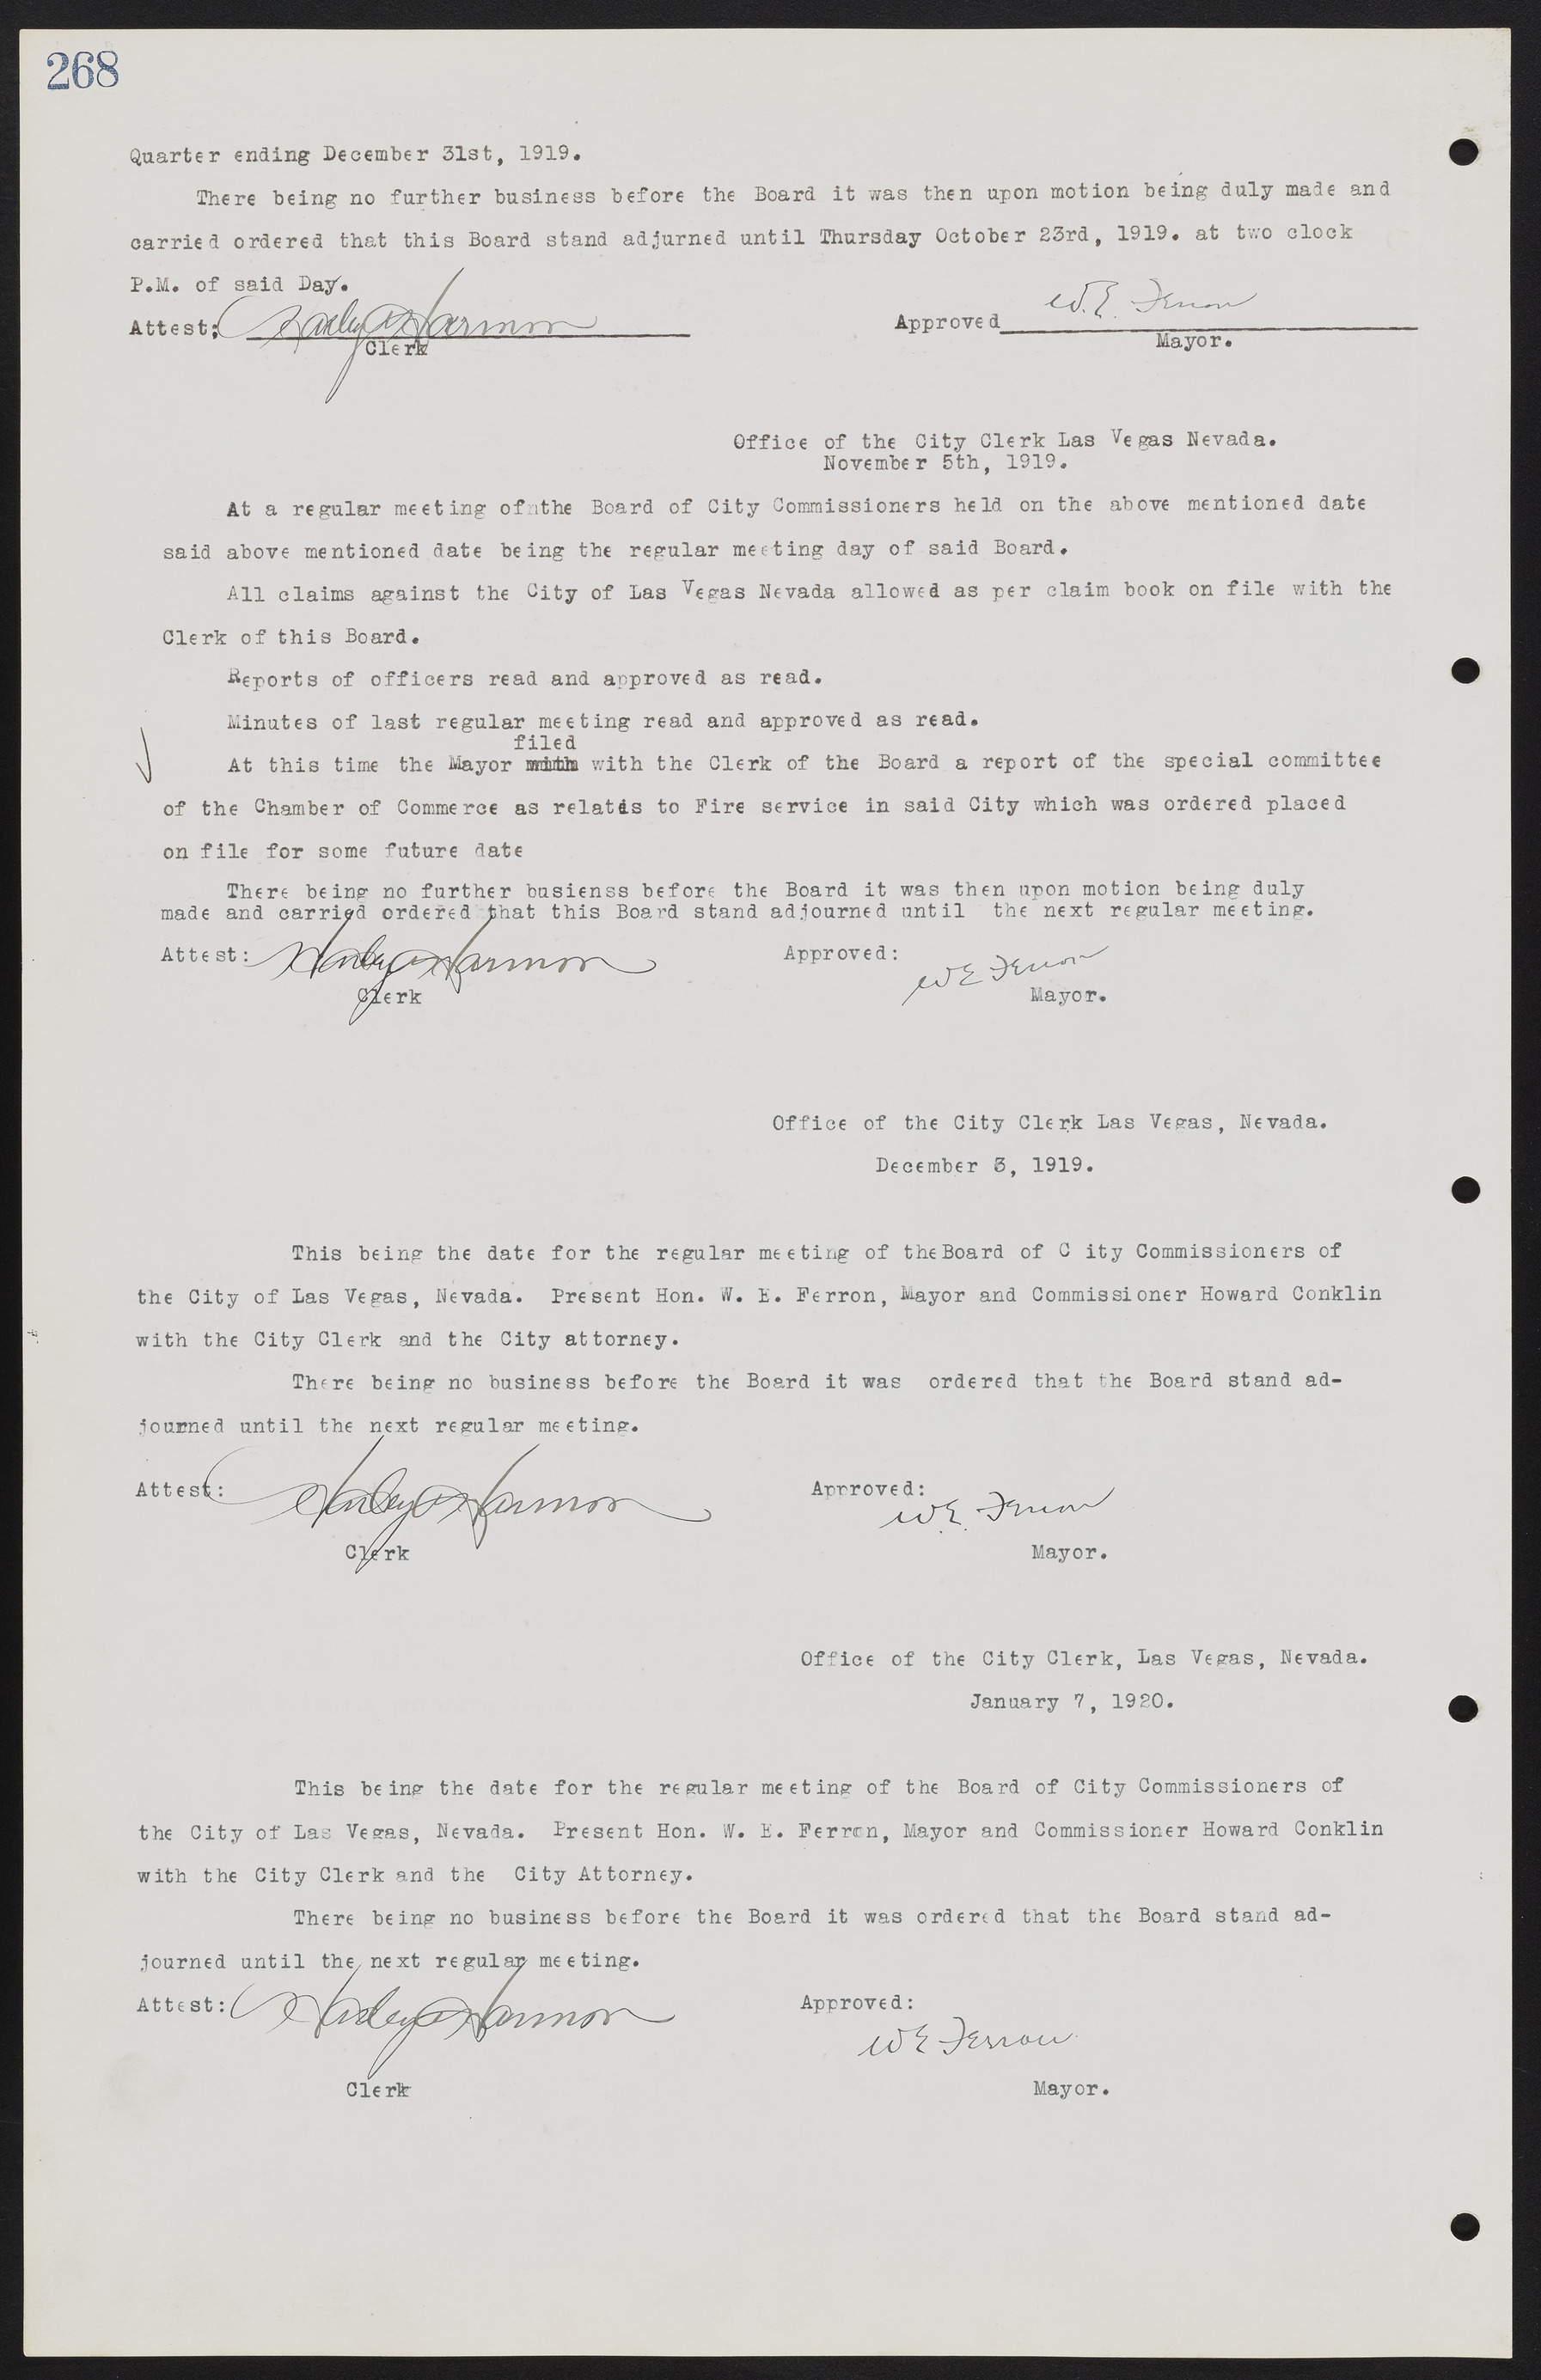 Las Vegas City Commission Minutes, June 22, 1911 to February 7, 1922, lvc000001-284